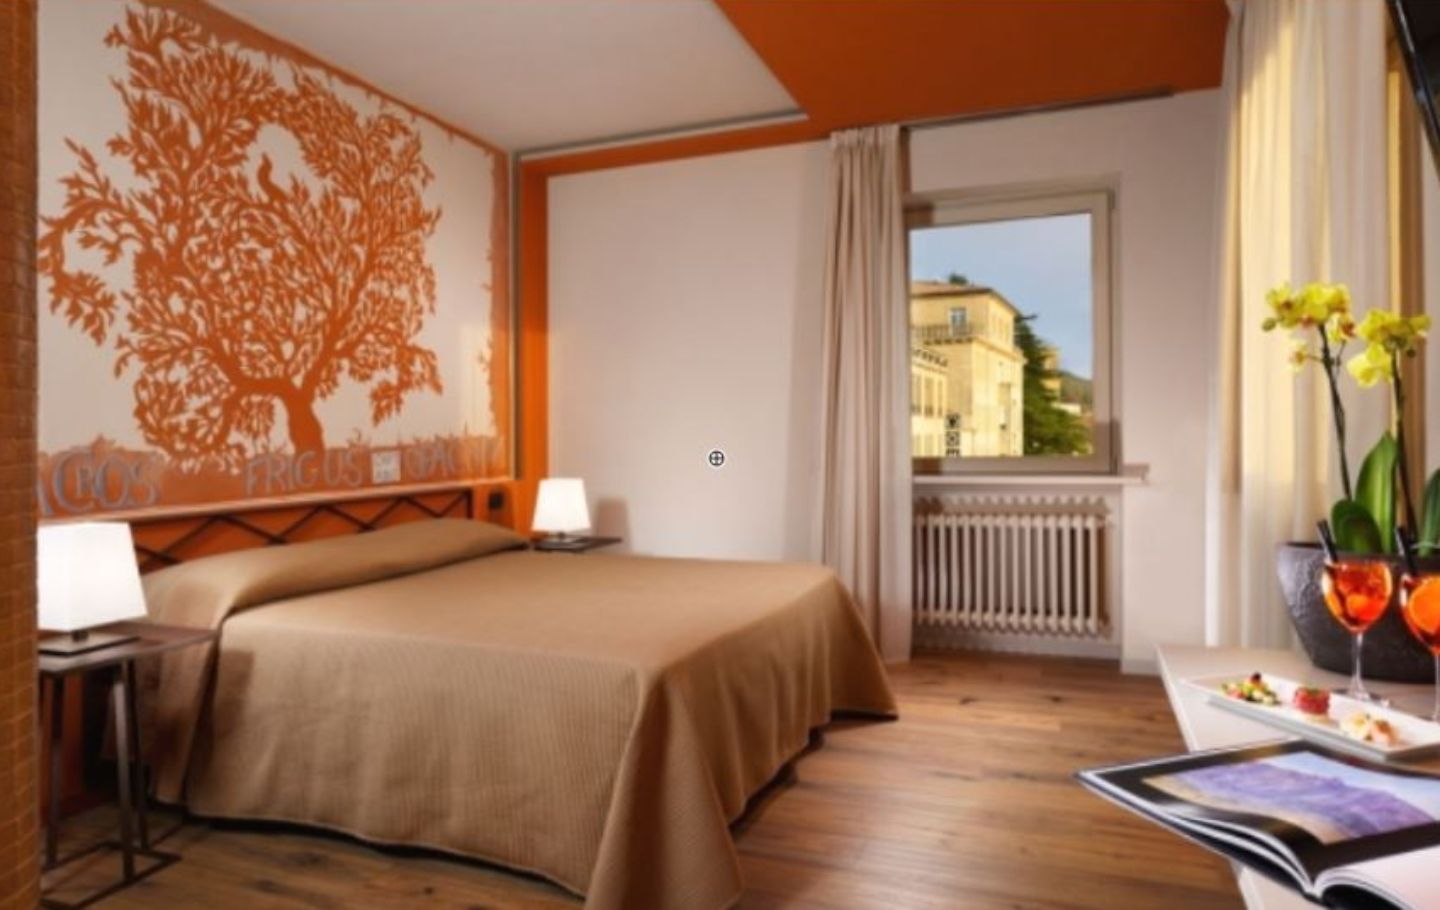 Where to sleep in San Marino